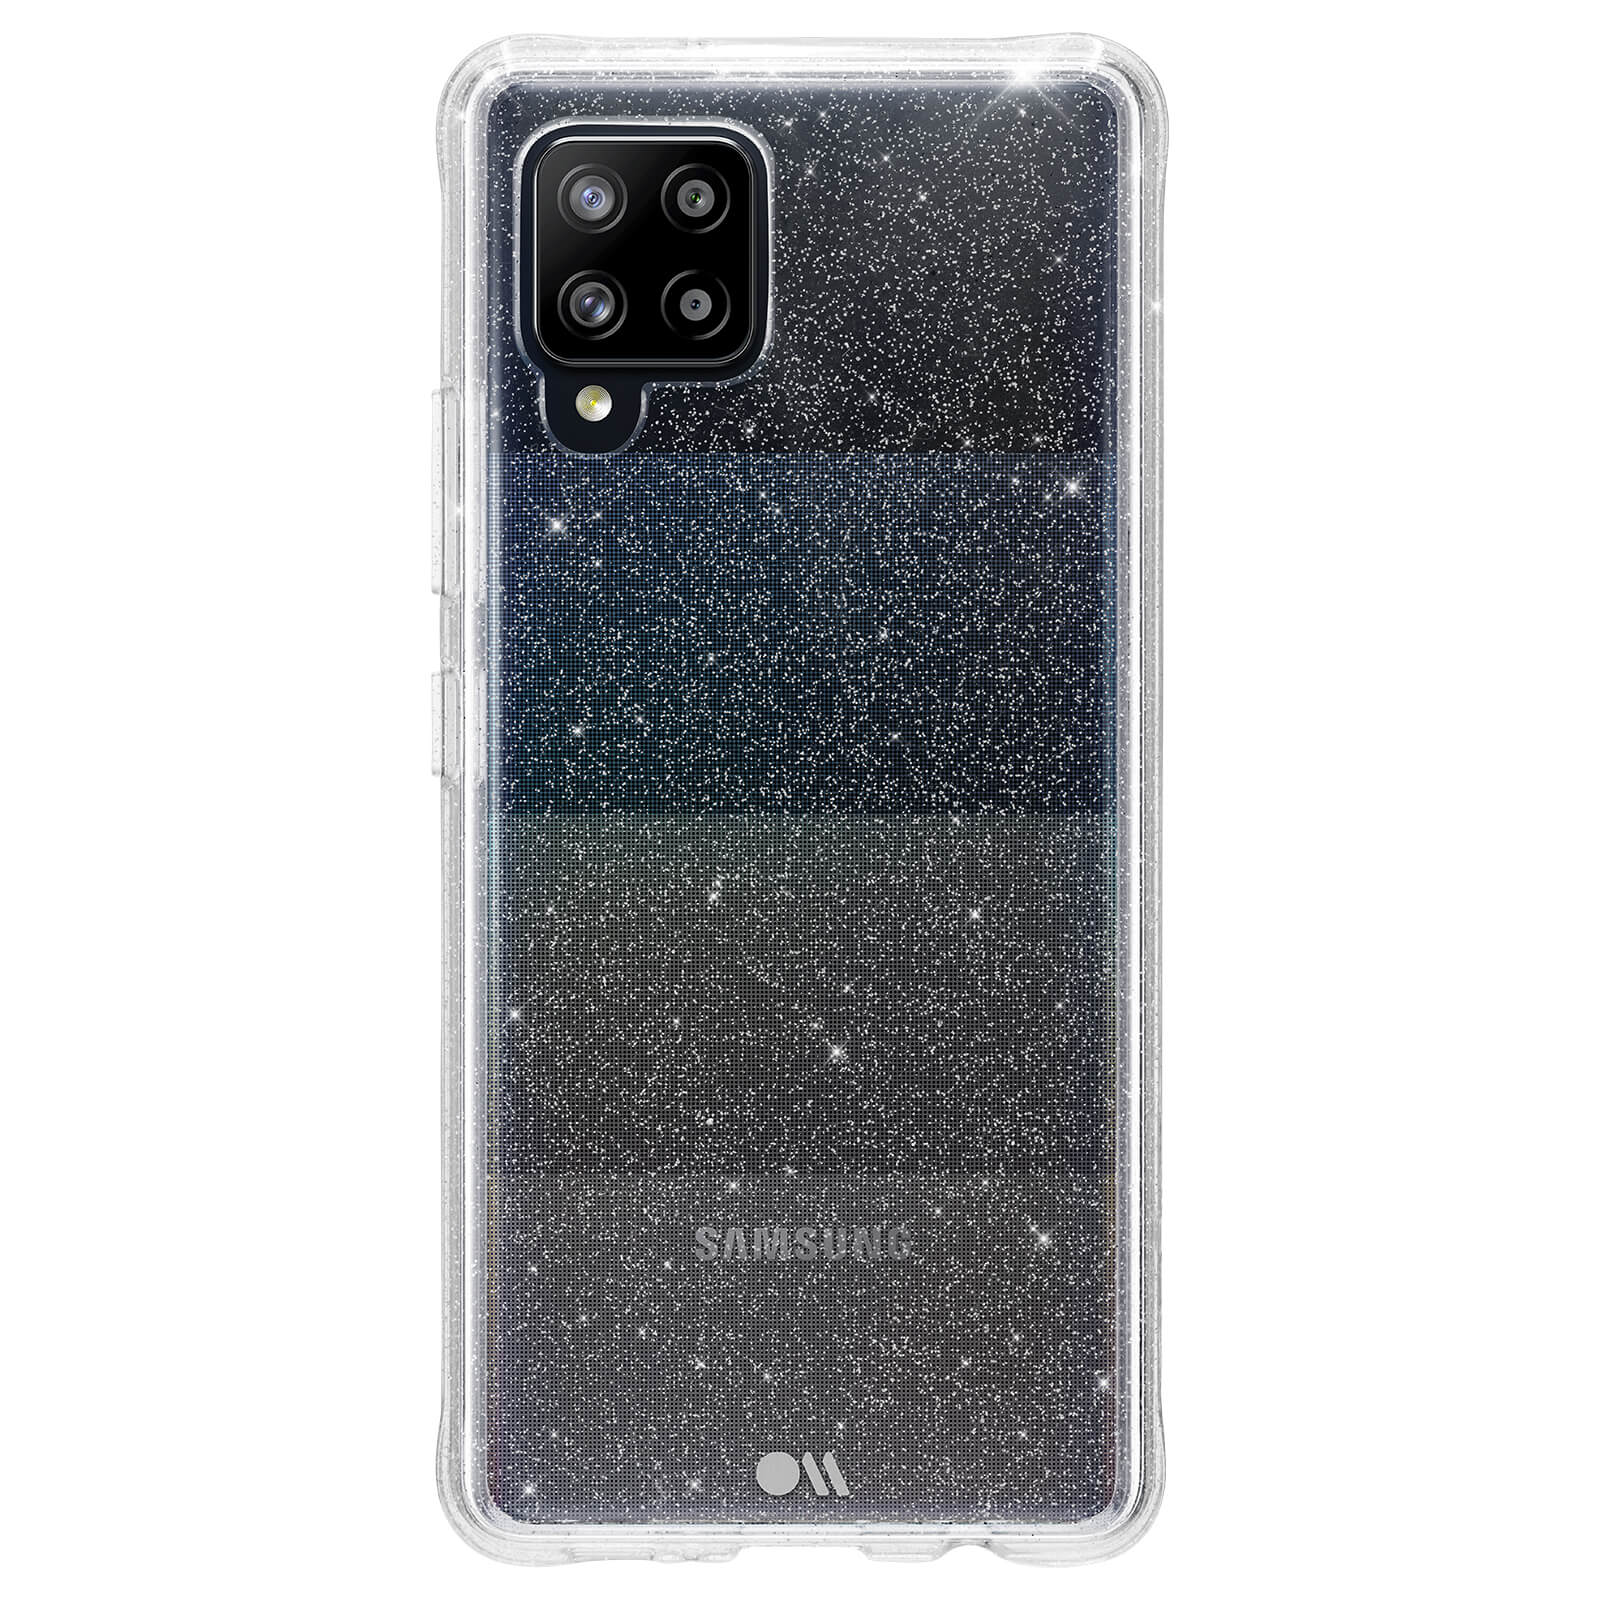 Photos - Case Case-Mate Sheer Crystal - Galaxy A42 5G Clear 